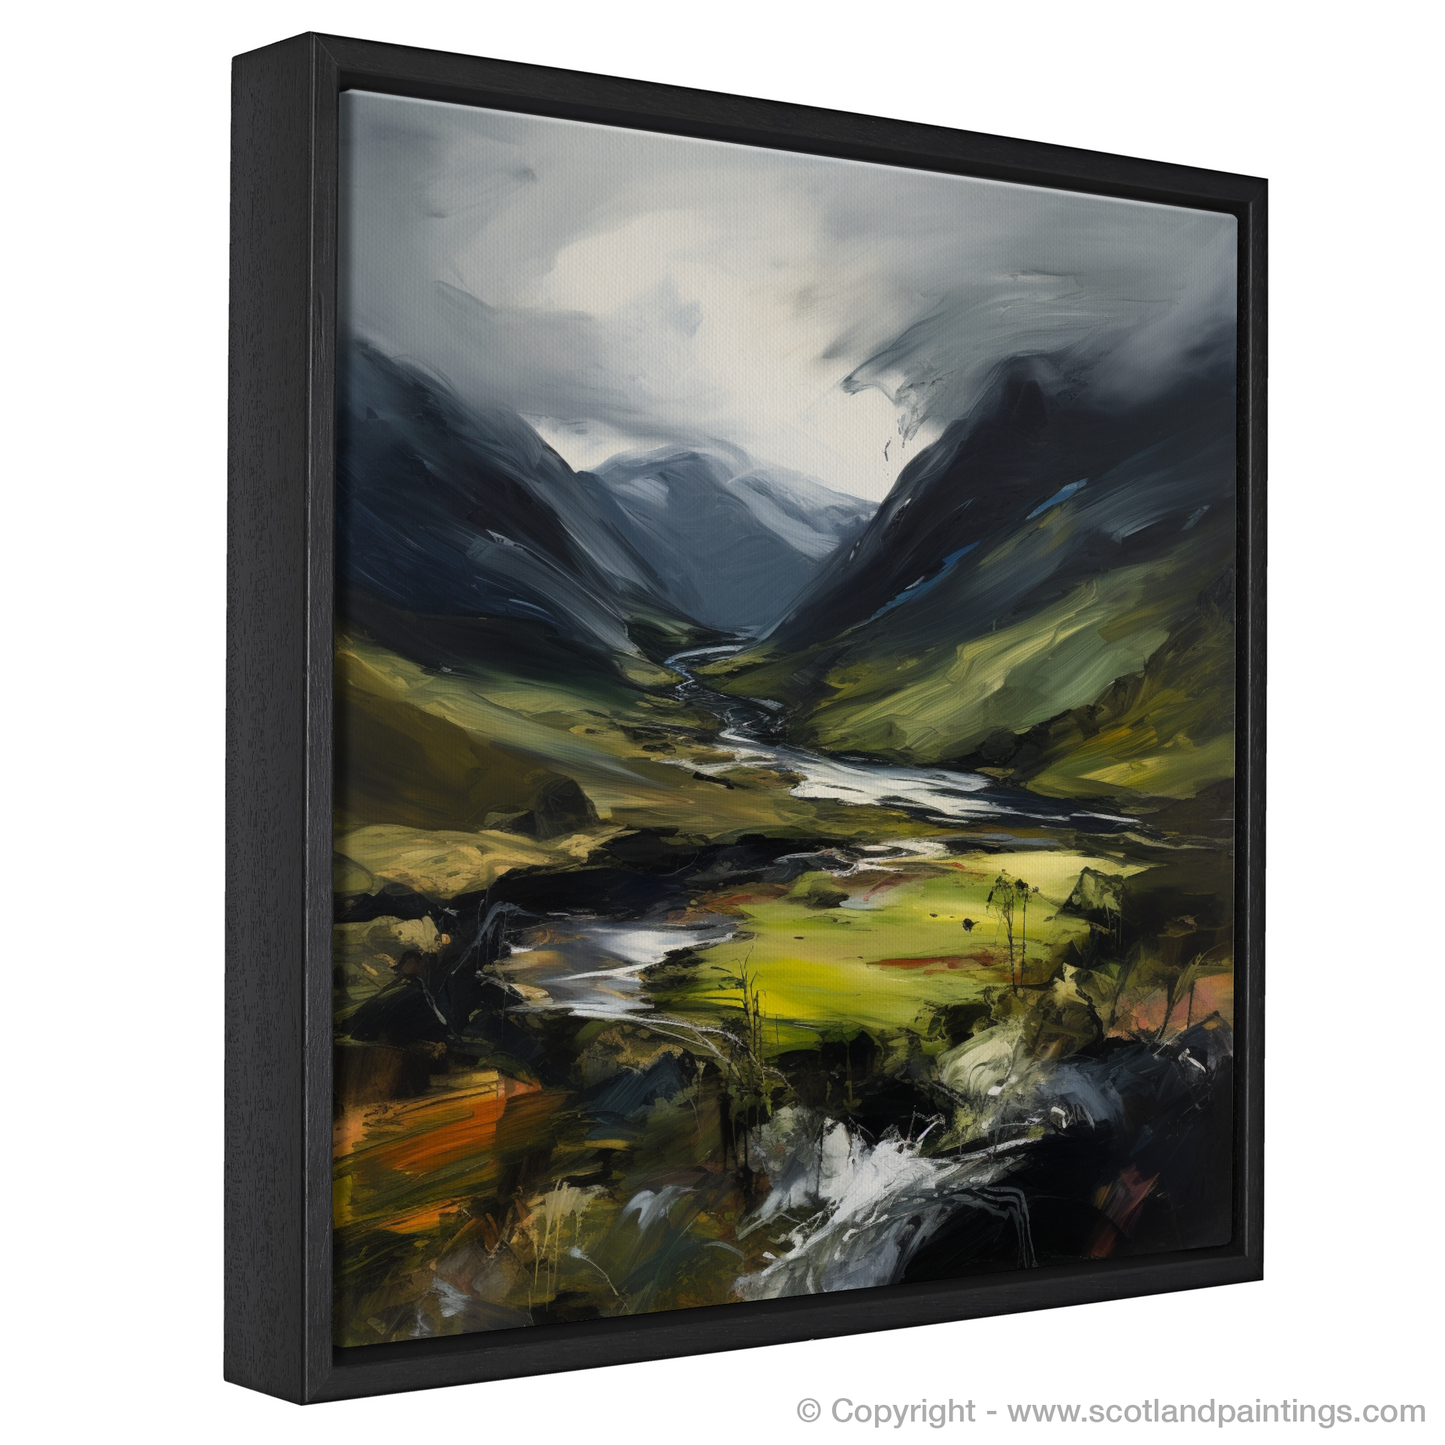 Painting and Art Print of Glen Strathfarrar, Highlands entitled "Highland Tempest: The Enigmatic Glen Strathfarrar".